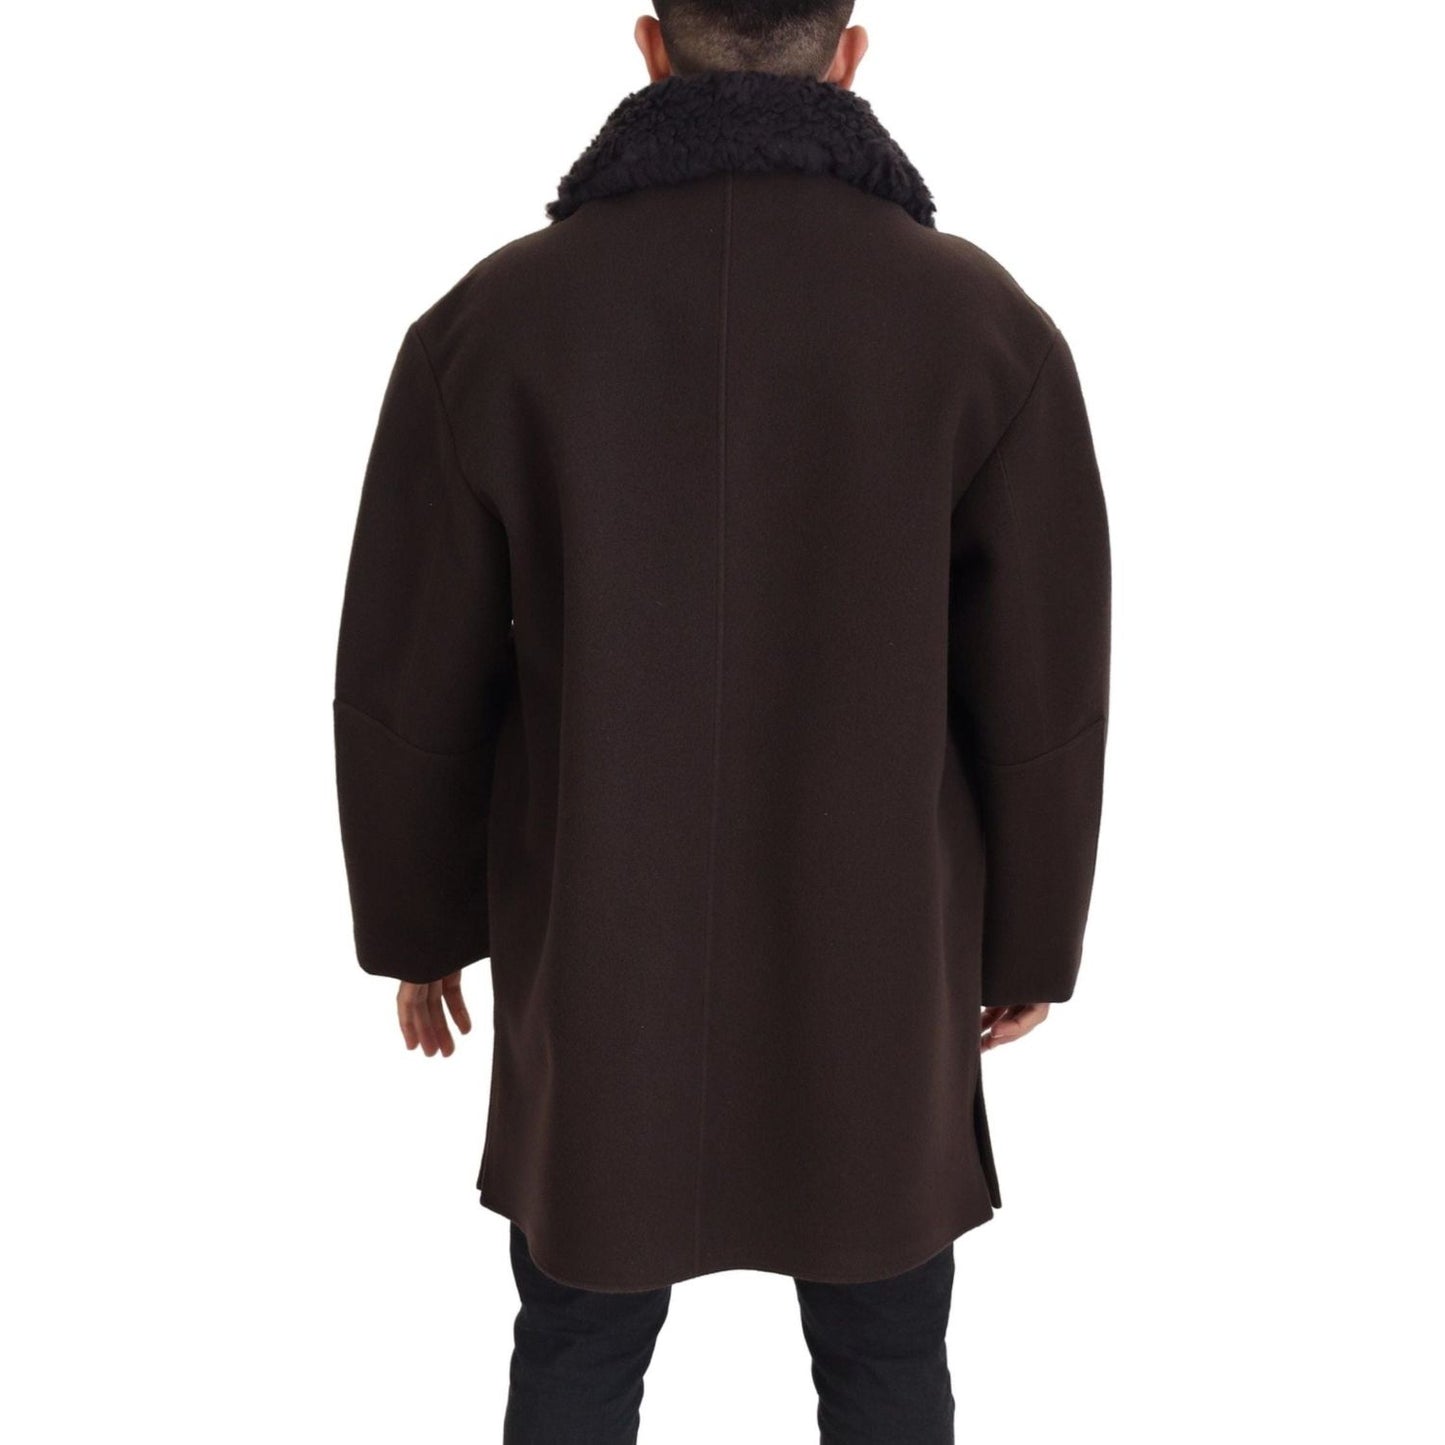 Dolce & Gabbana Elegant Dark Brown Shearling Coat Jacket elegant-dark-brown-shearling-coat-jacket